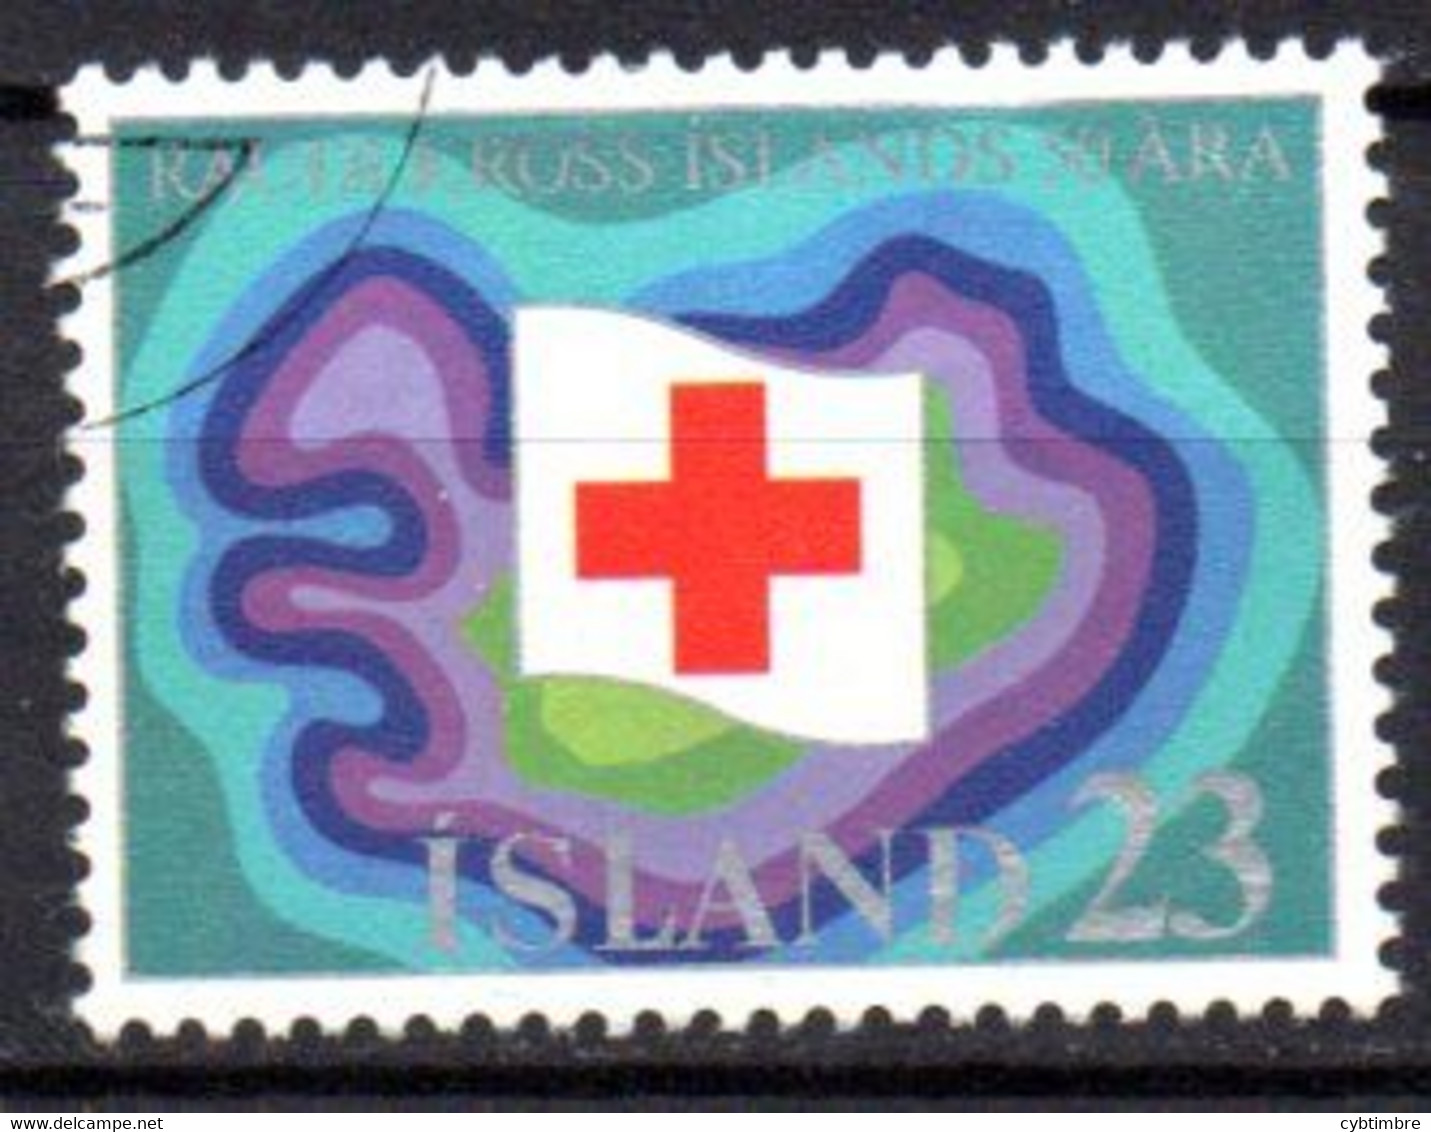 Islande: Yvert N° 462, Croix Rouge - Oblitérés